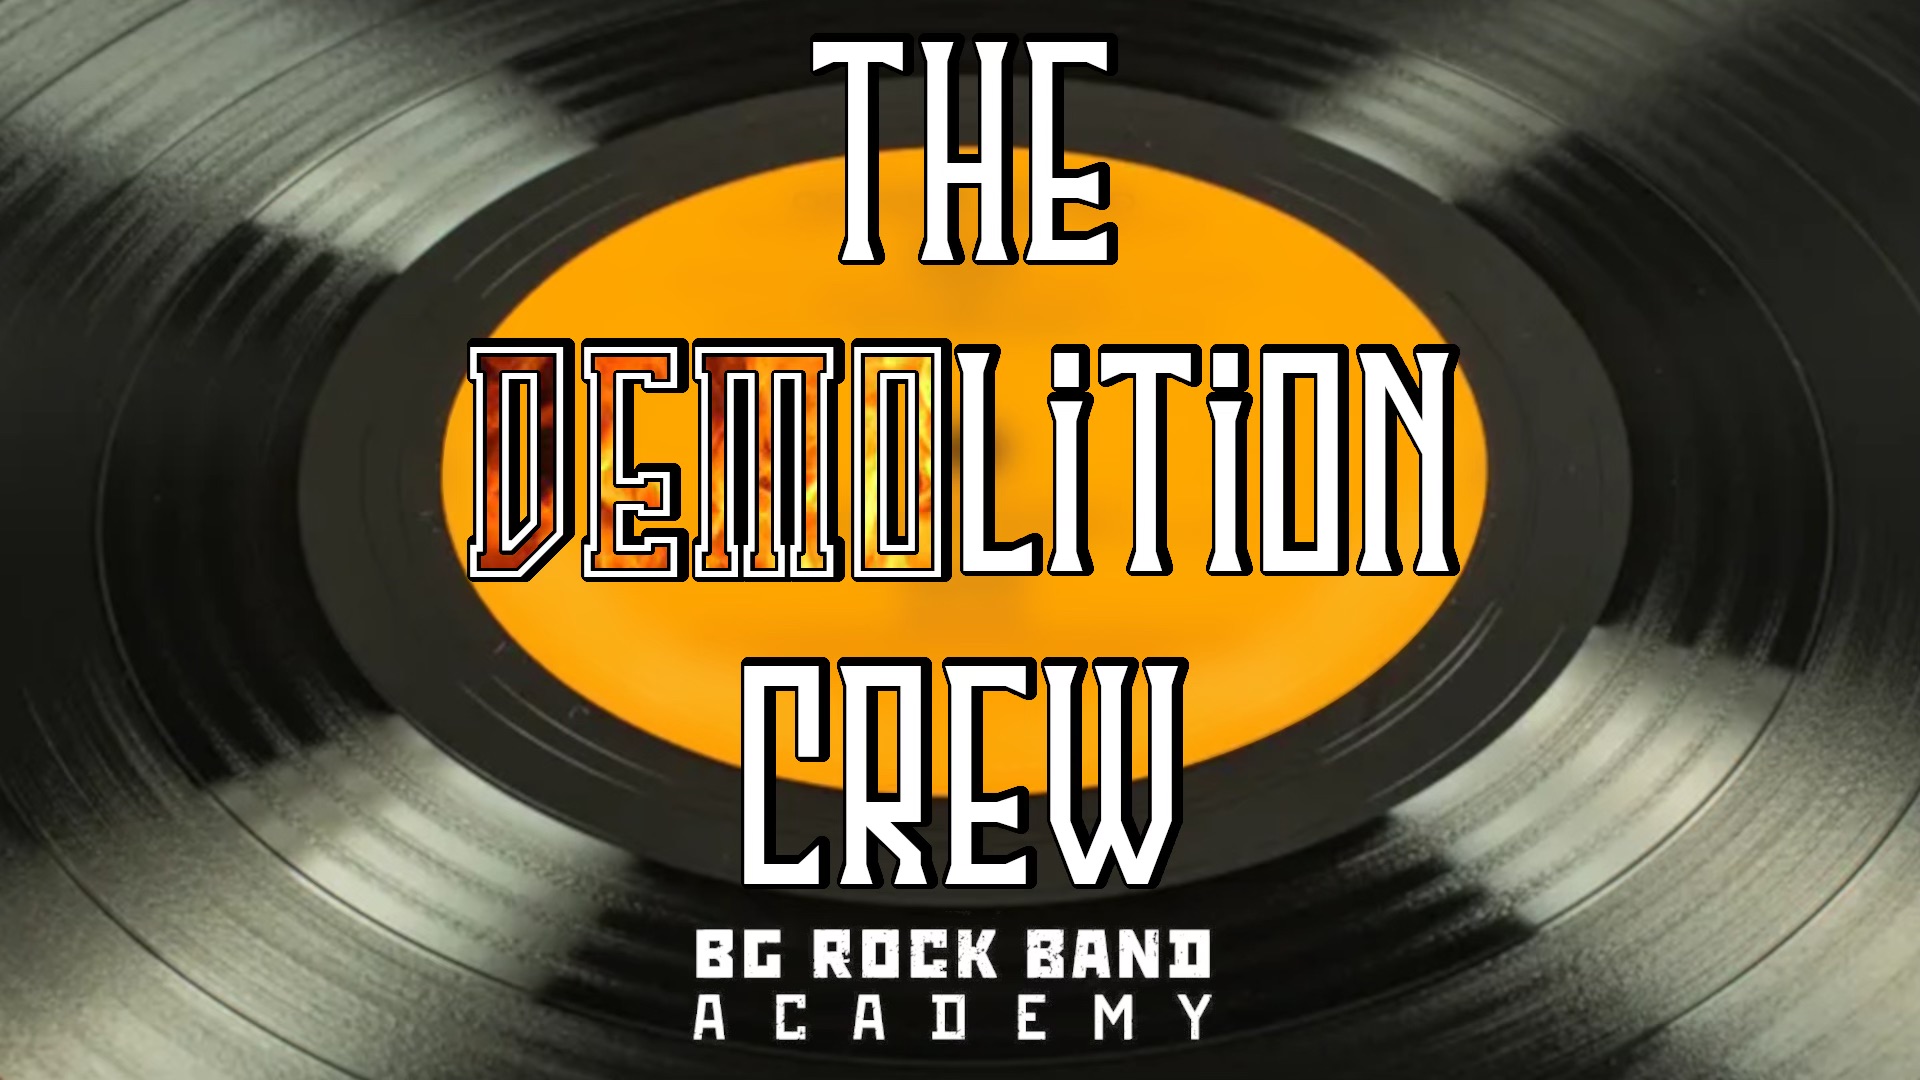 The Demolition Crew at BG Rock Band Academy